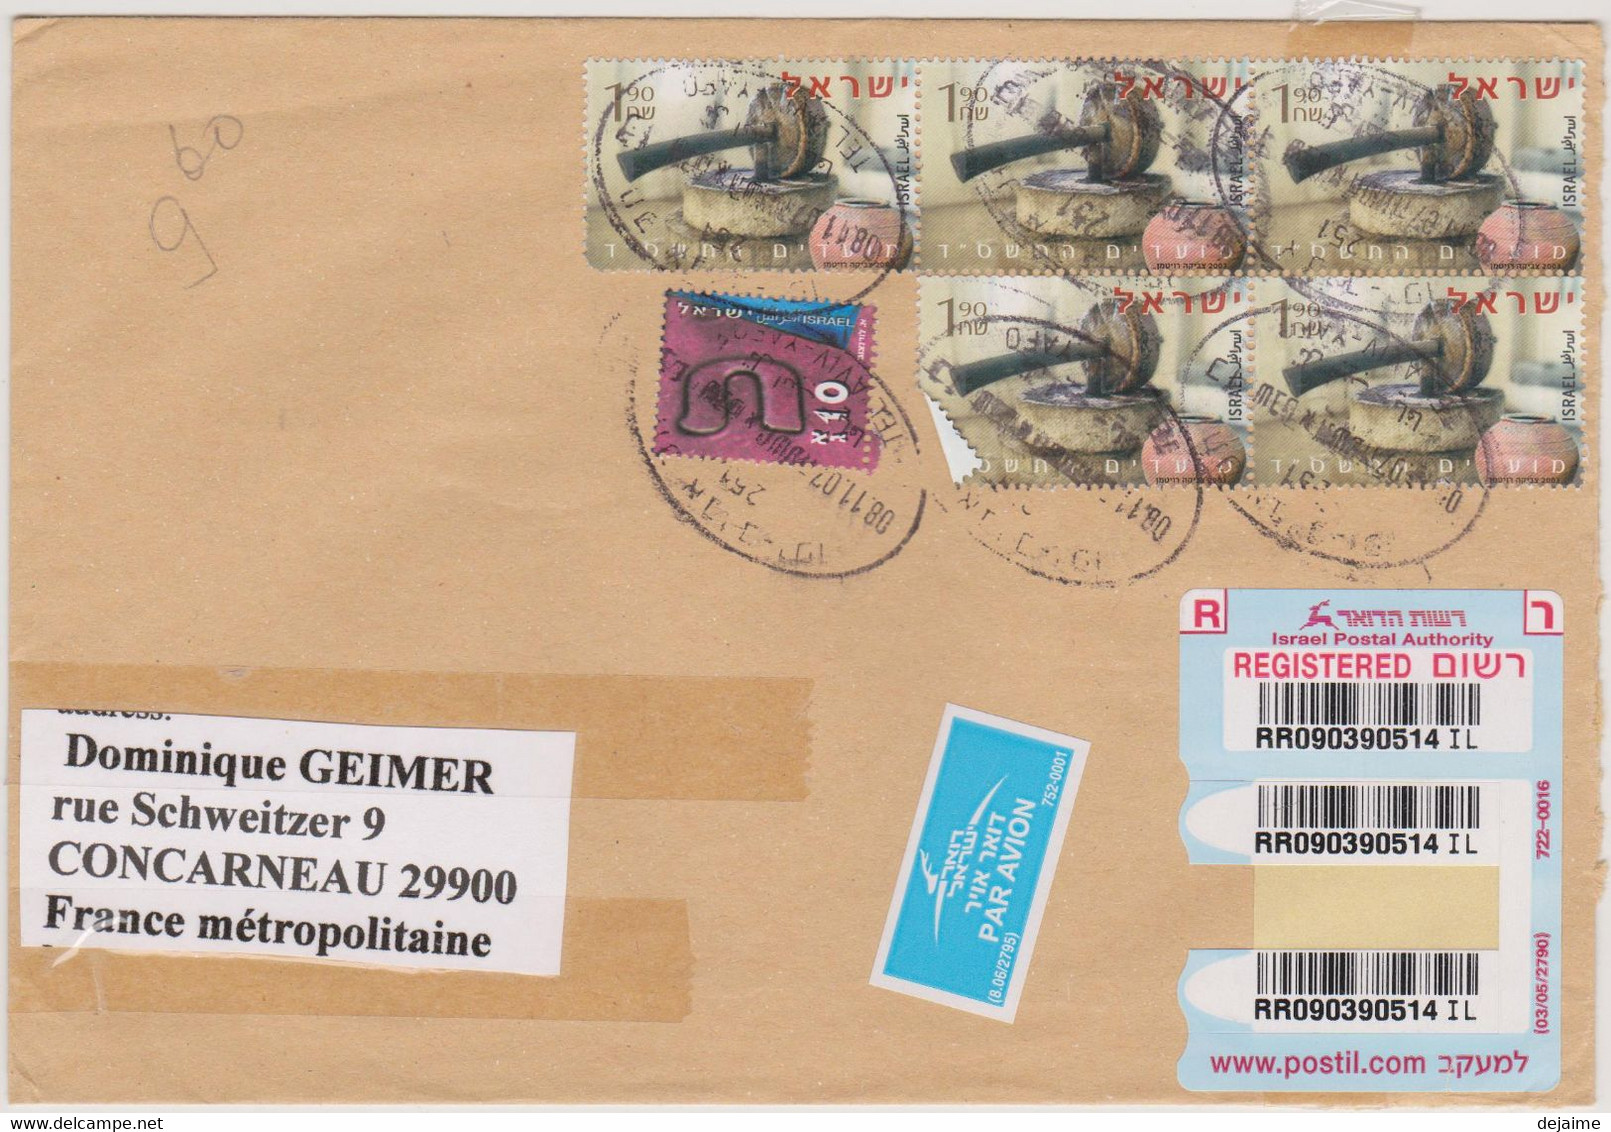 ISRAEL 2007 Enveloppe Recommandée Vers La France Affranchissement N°YT 1678 Huile D'Olive X5  Cachet 8 11 2007 - Storia Postale